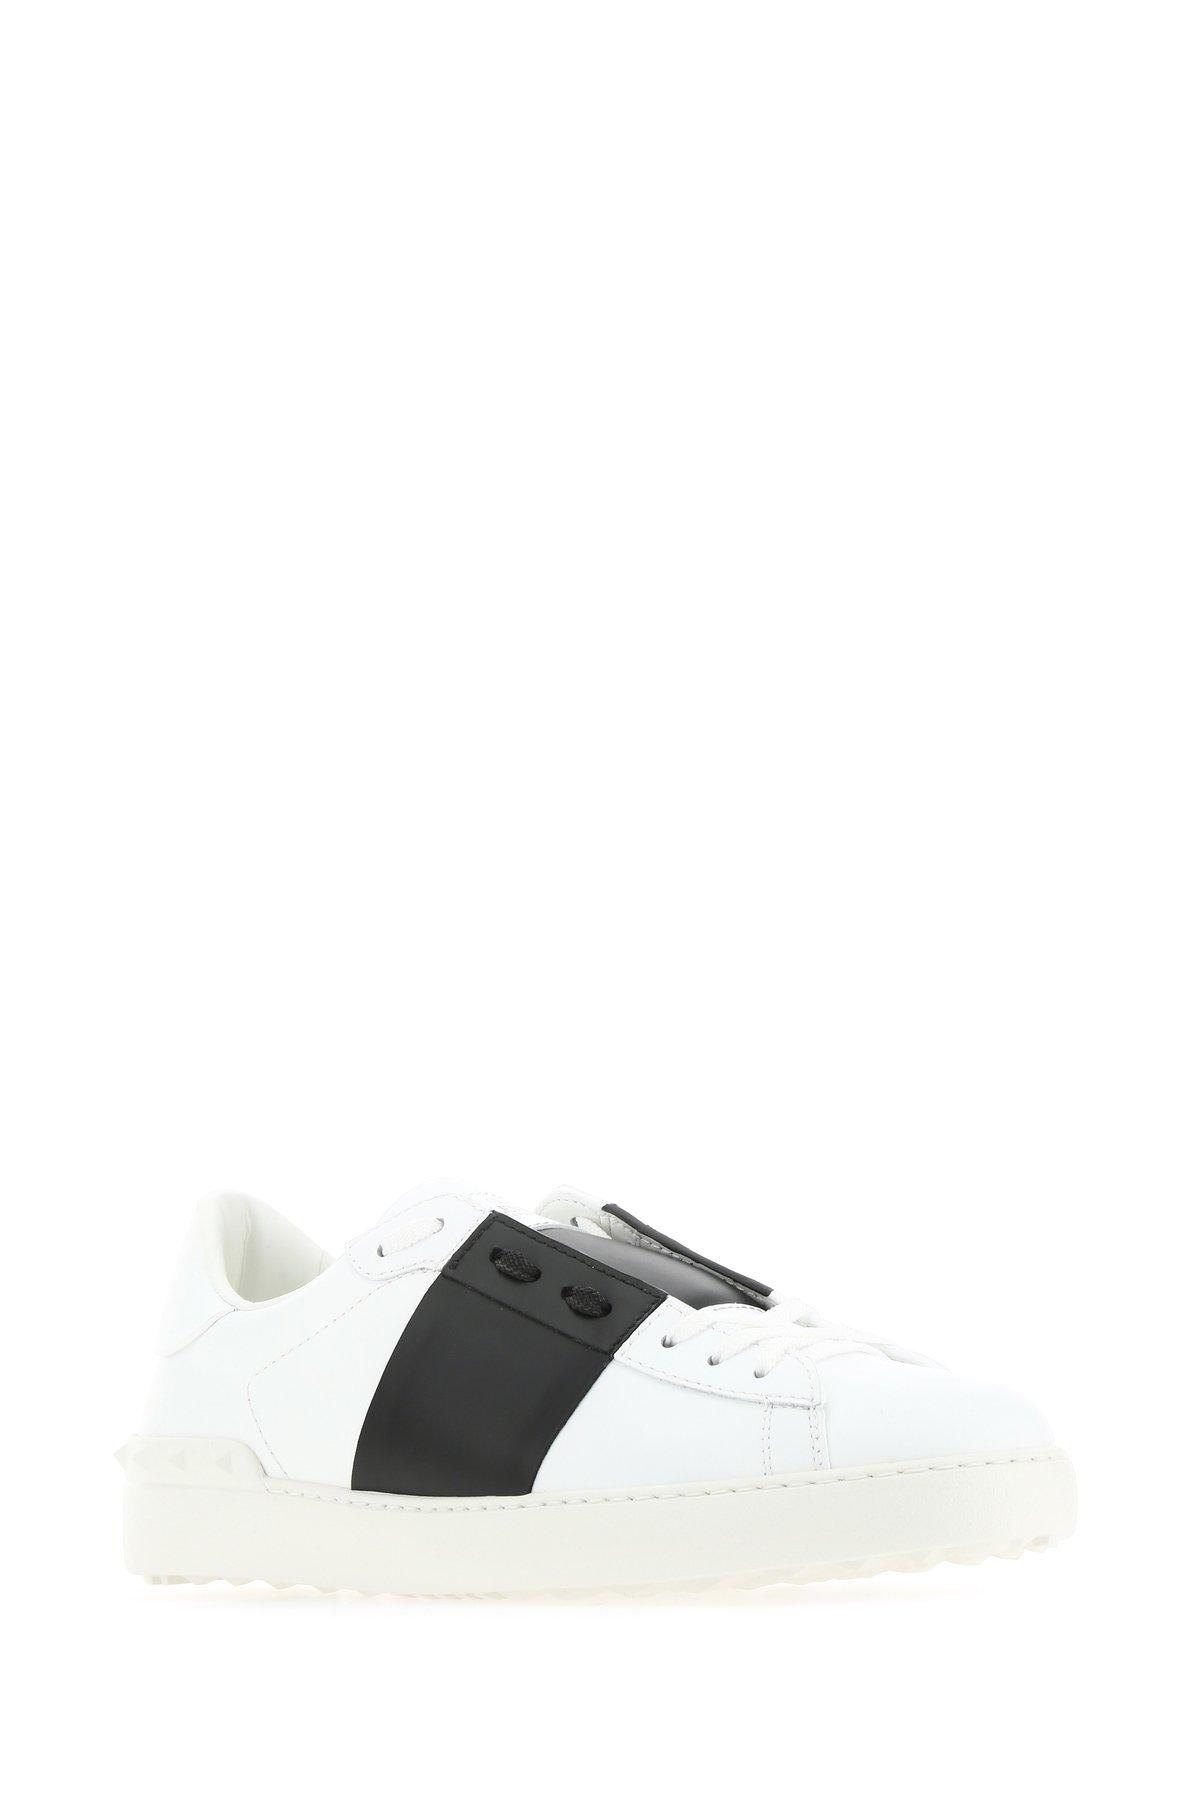 Valentino Garavani Open Rockstud Leather Sneaker in White/ Black (White ...